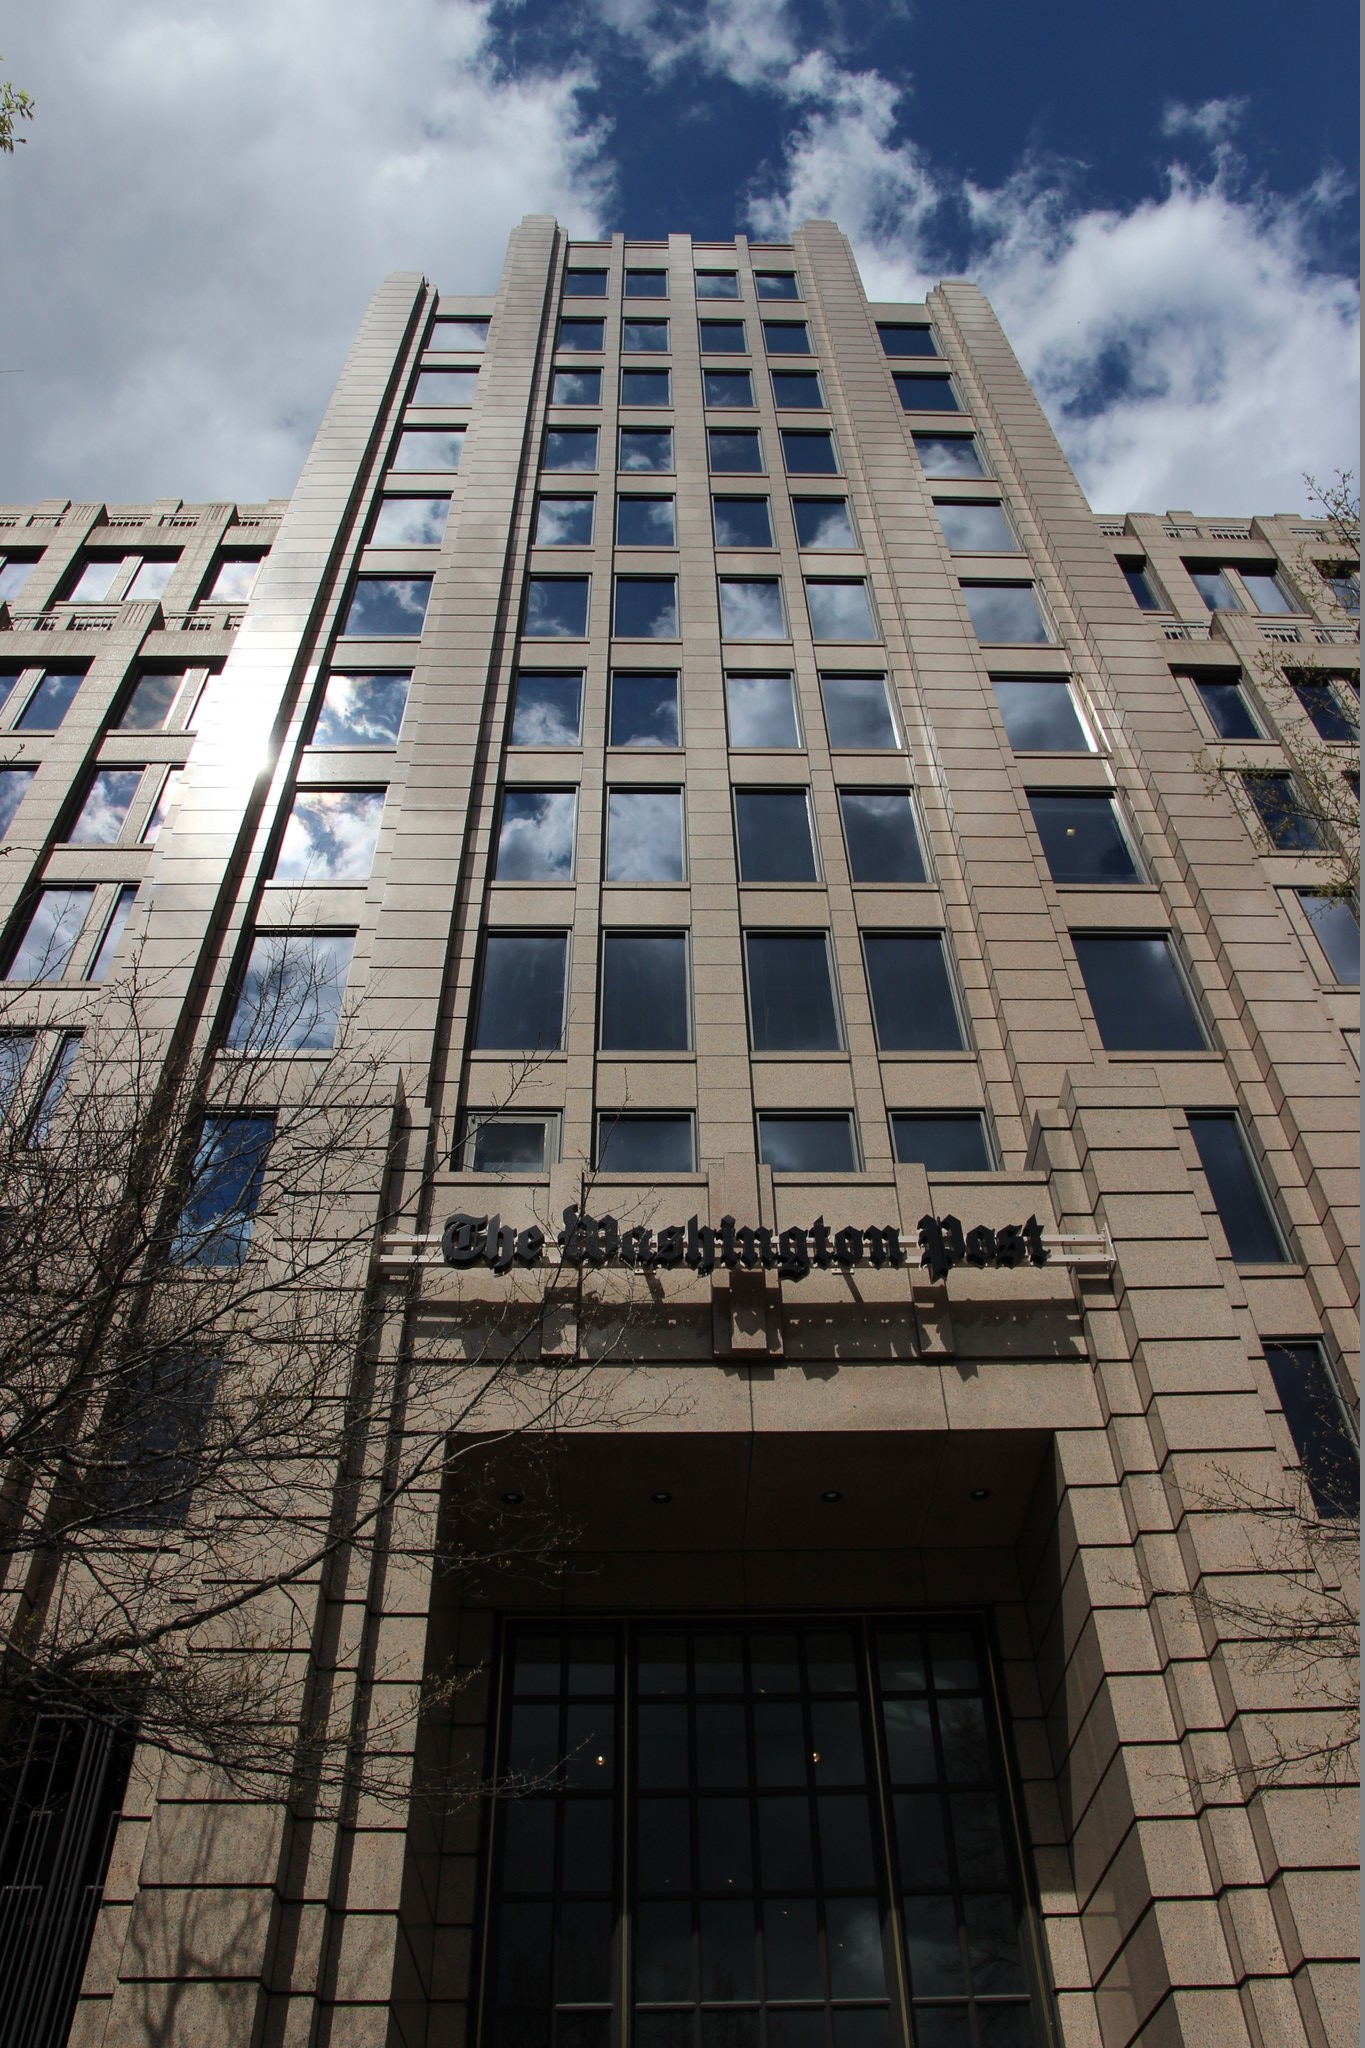 The Washington Post office image